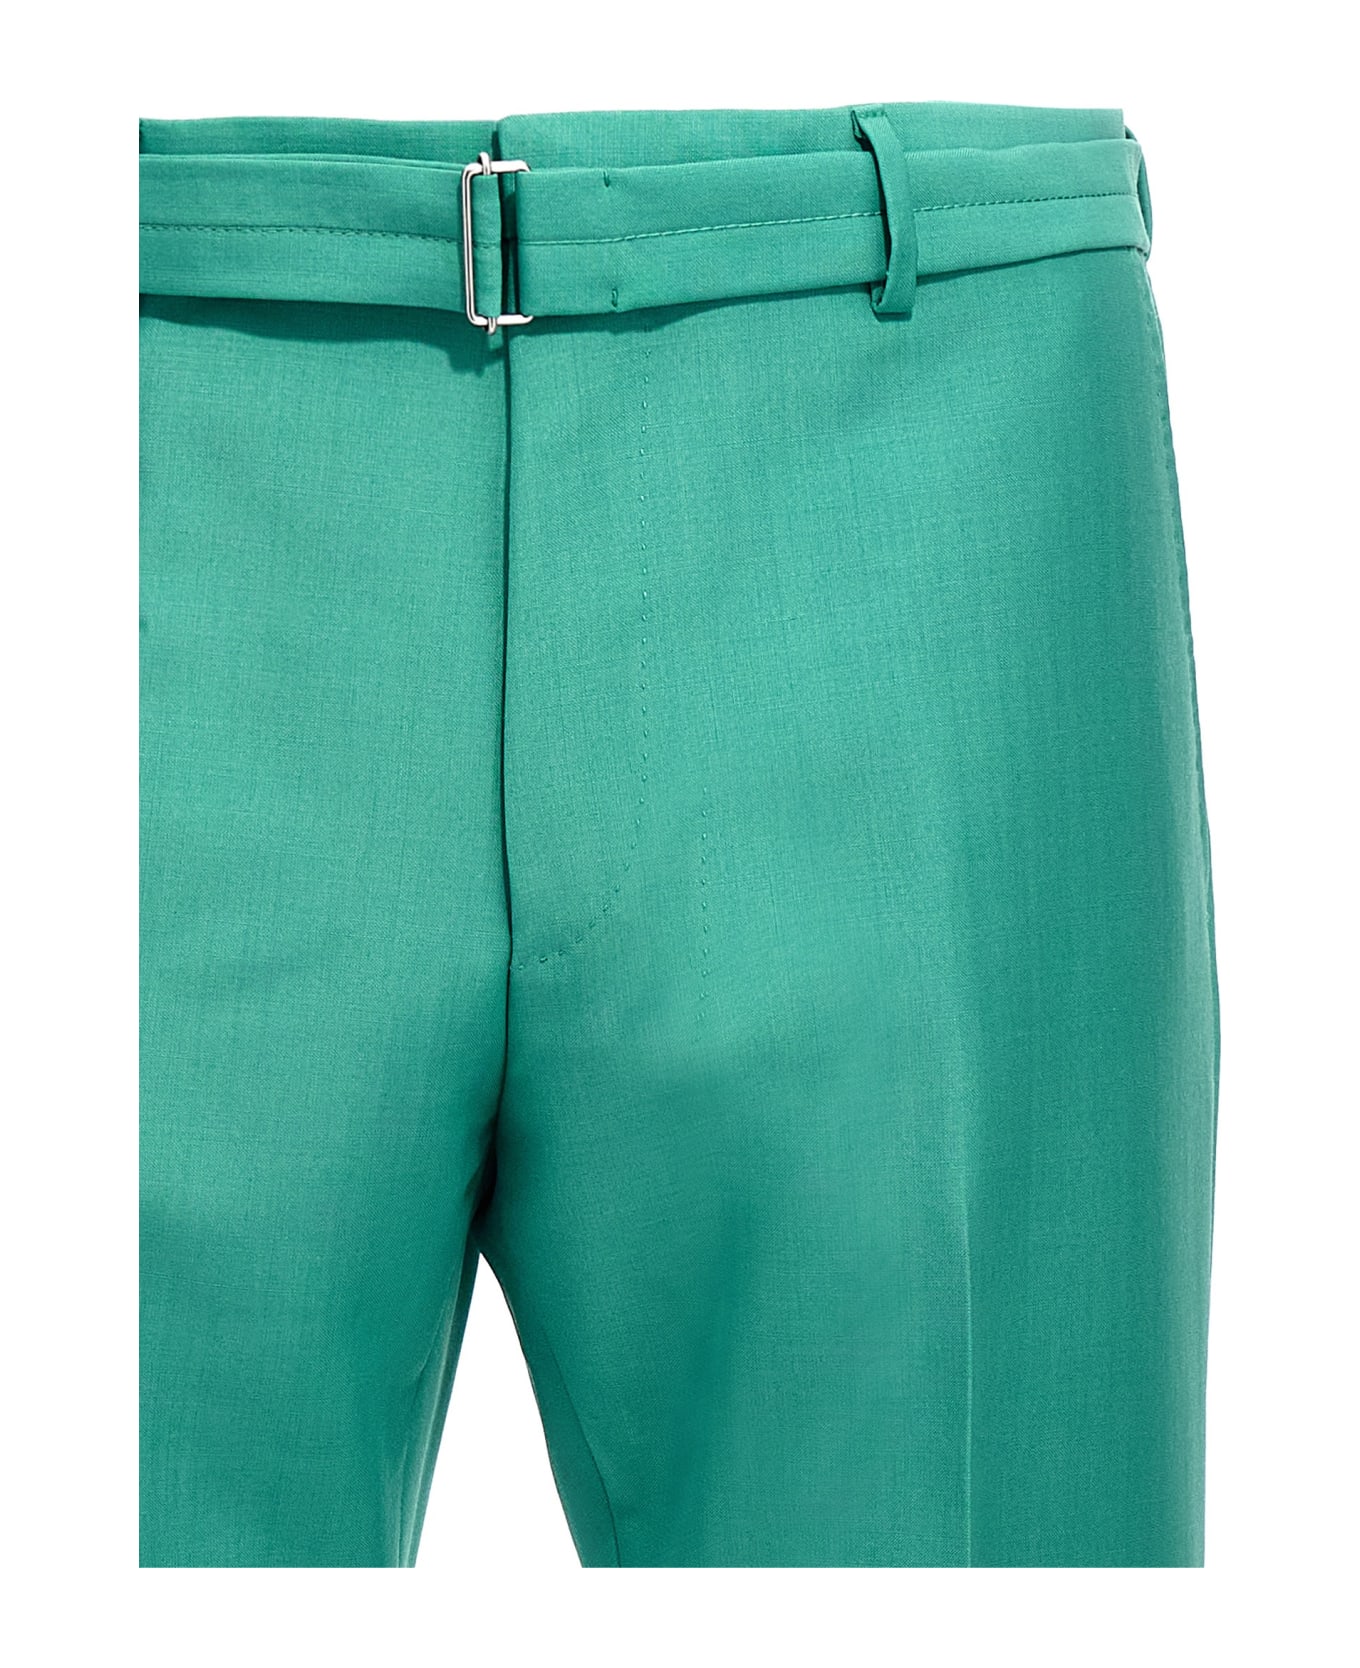 Lanvin Belted Pants - Green